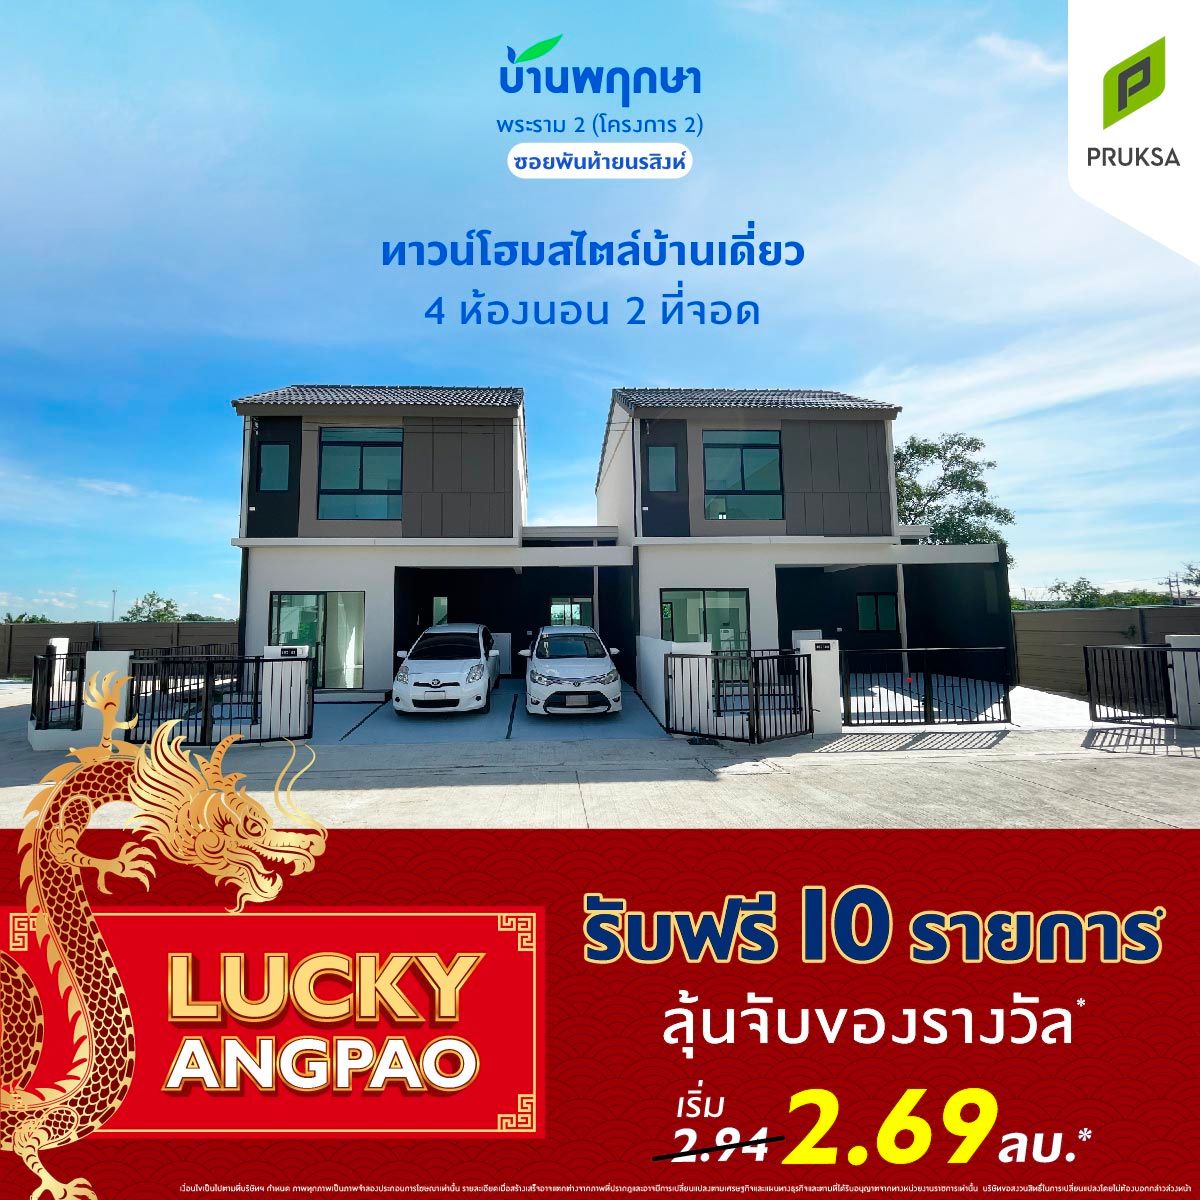 24 Feb FB Lucky Angpao NW PK1352   Copy